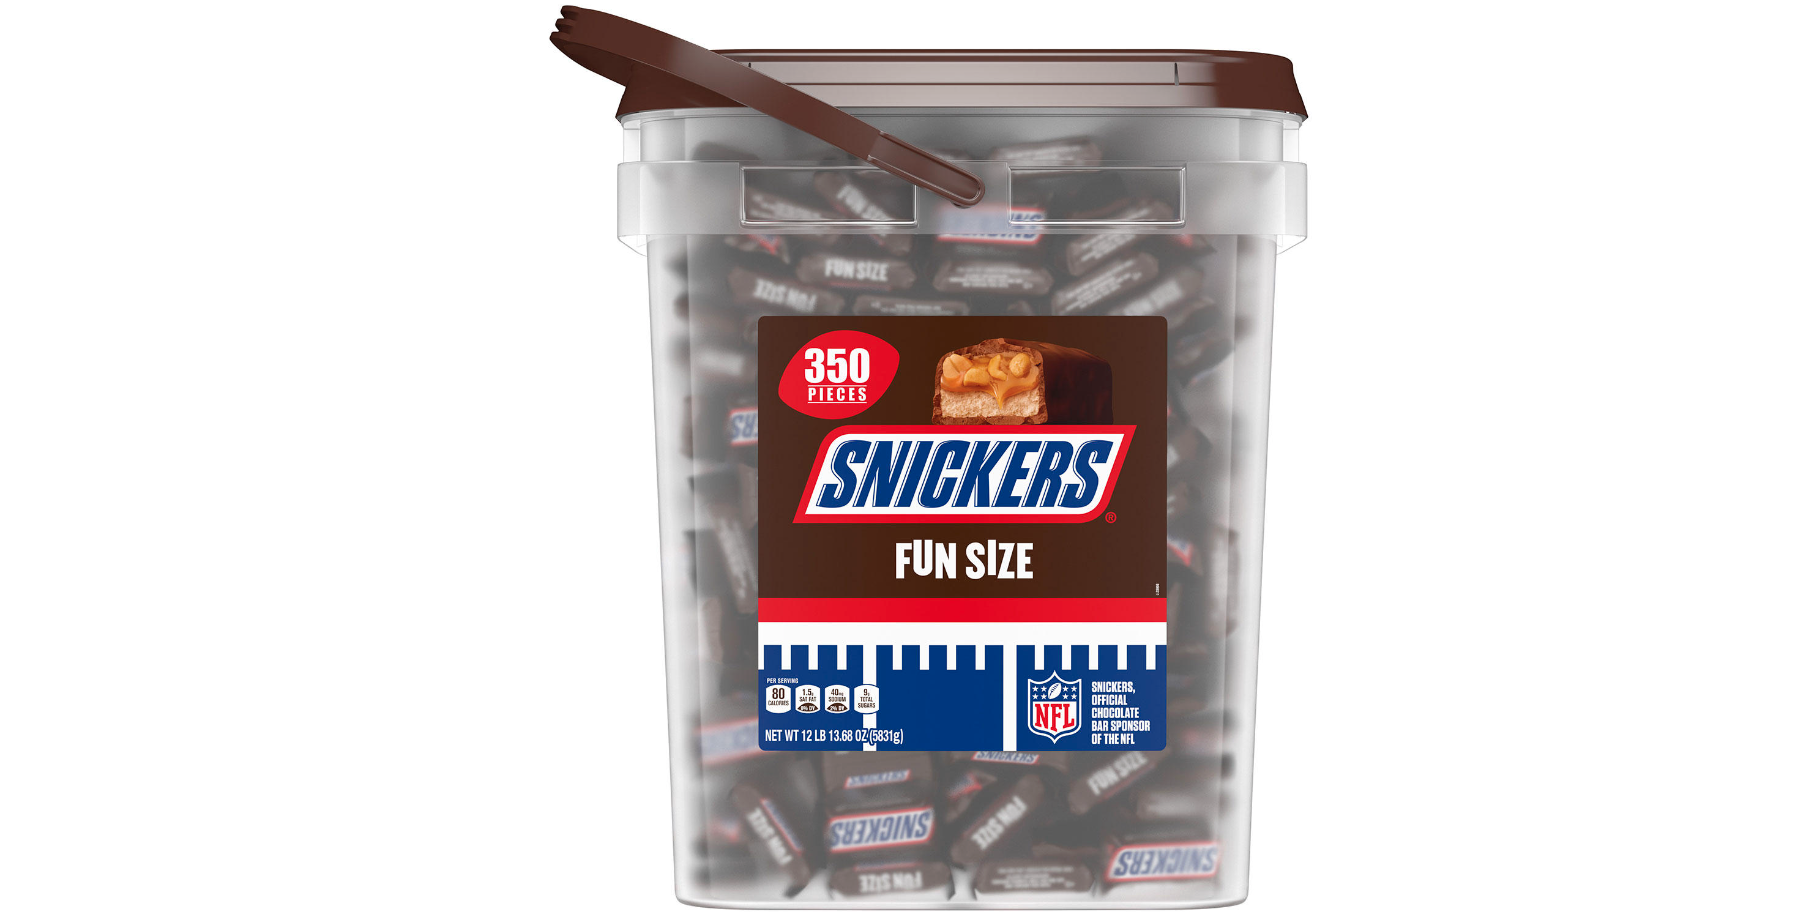 Milky Way, Snickers, Twix, Starburst & More Bulk Halloween Candy (450 ct.)  - Sam's Club